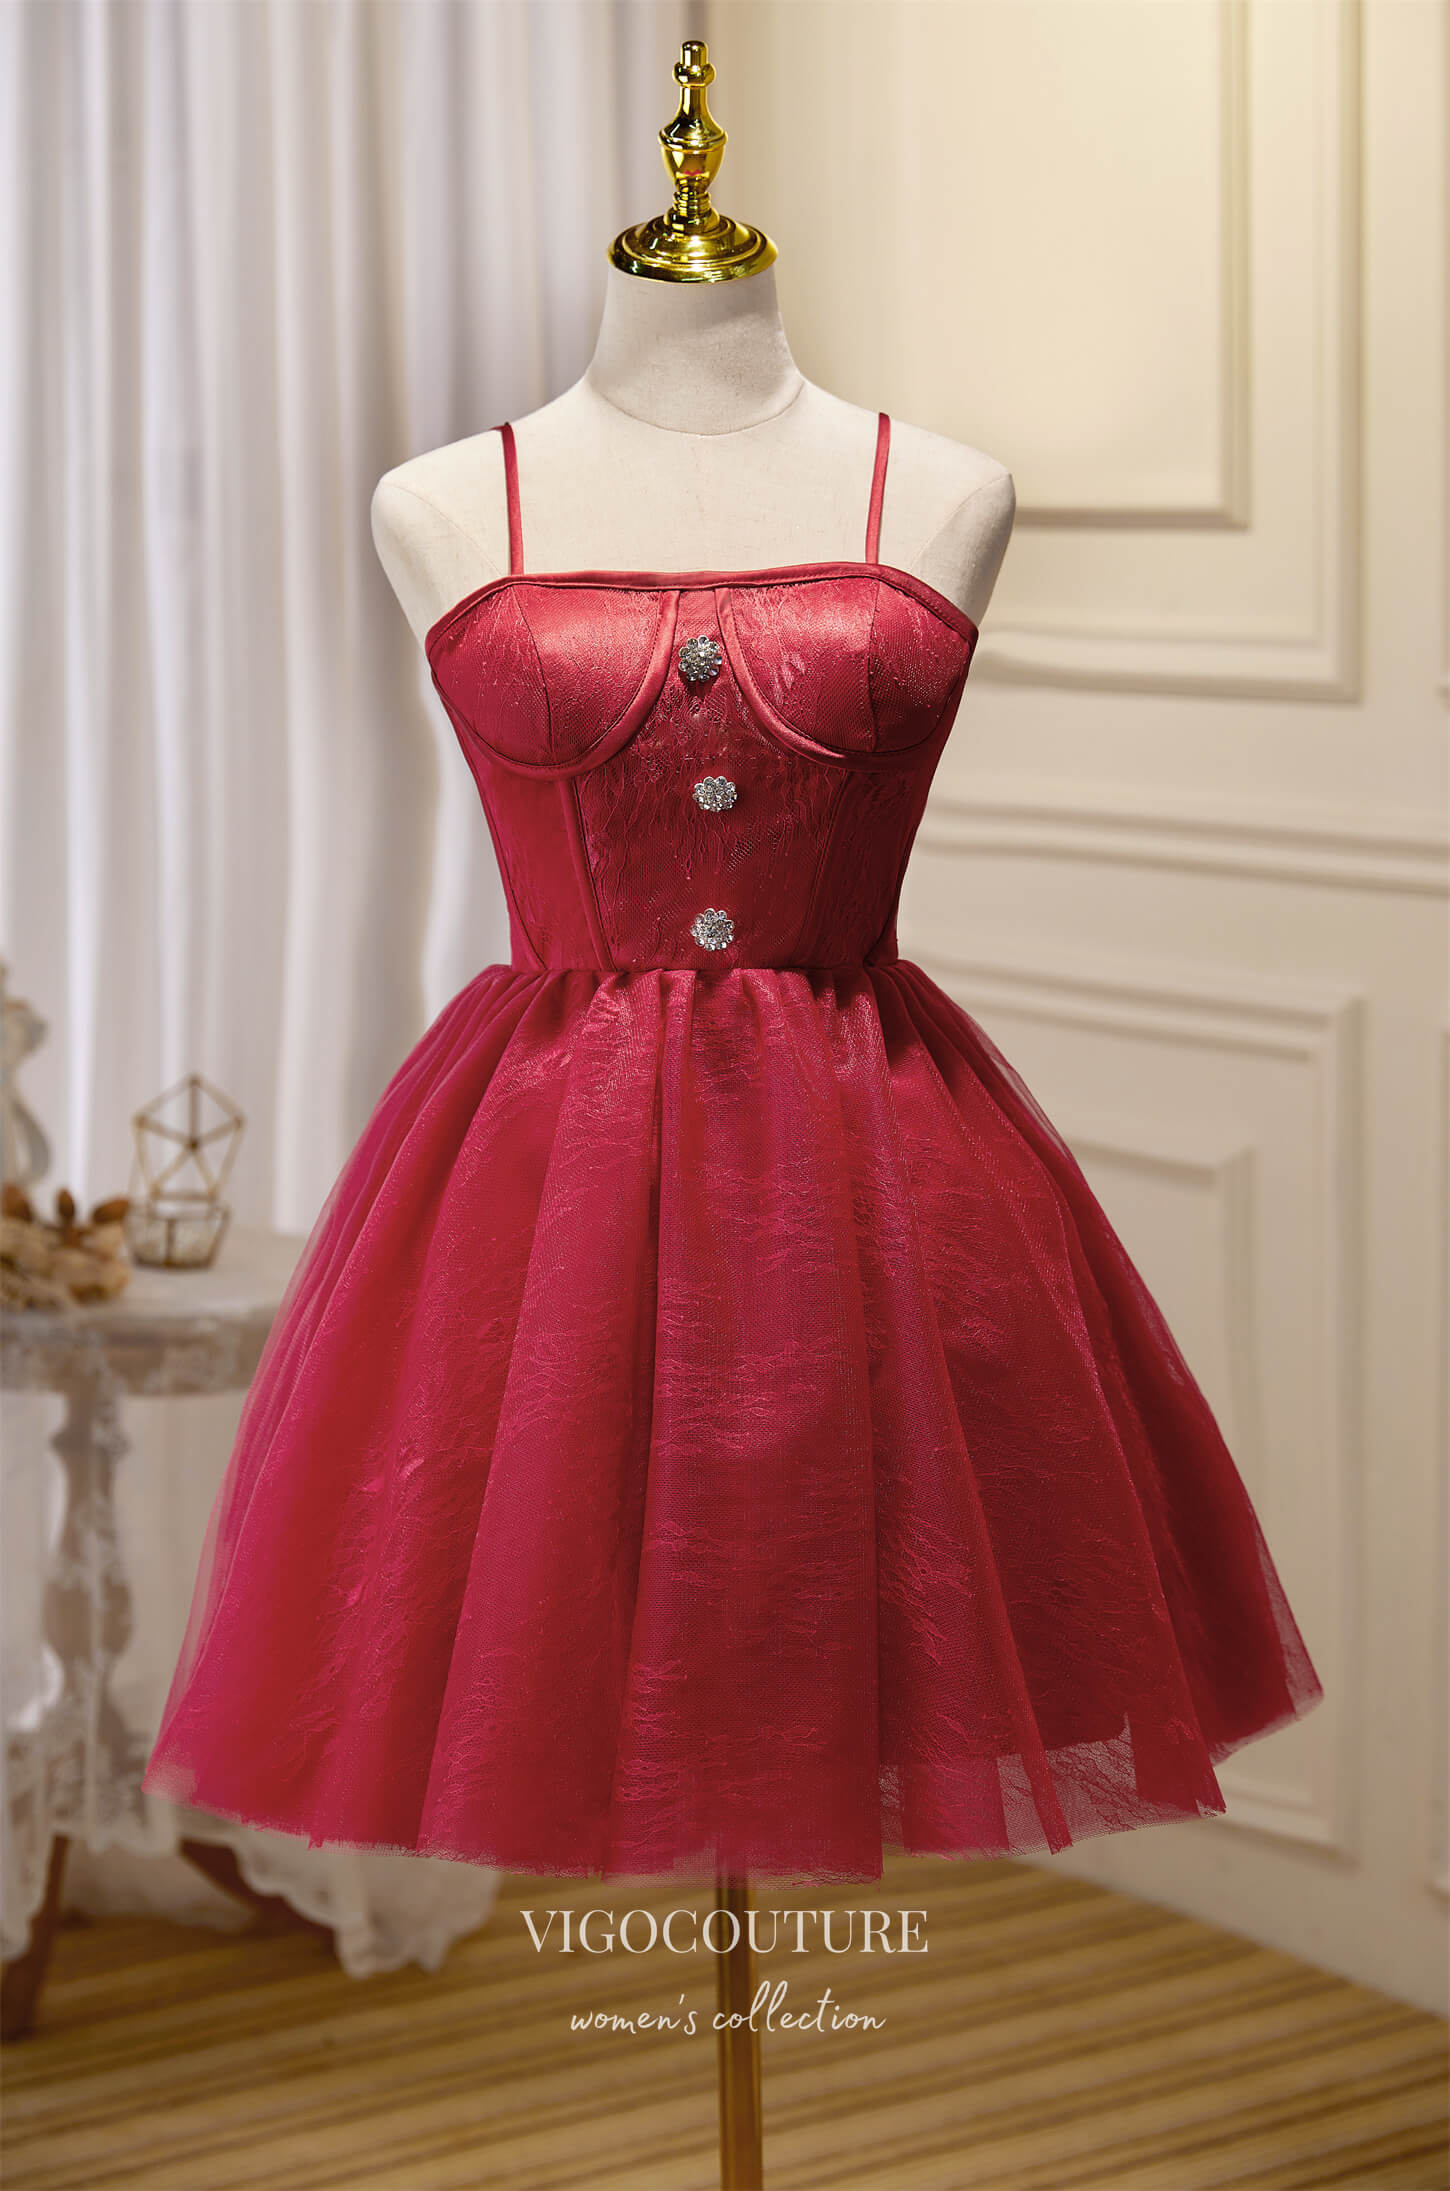 vigocouture-Cute Homecoming Dresses Spaghetti Strap Hoco Dresses hc237-Prom Dresses-vigocouture-Red-US0-